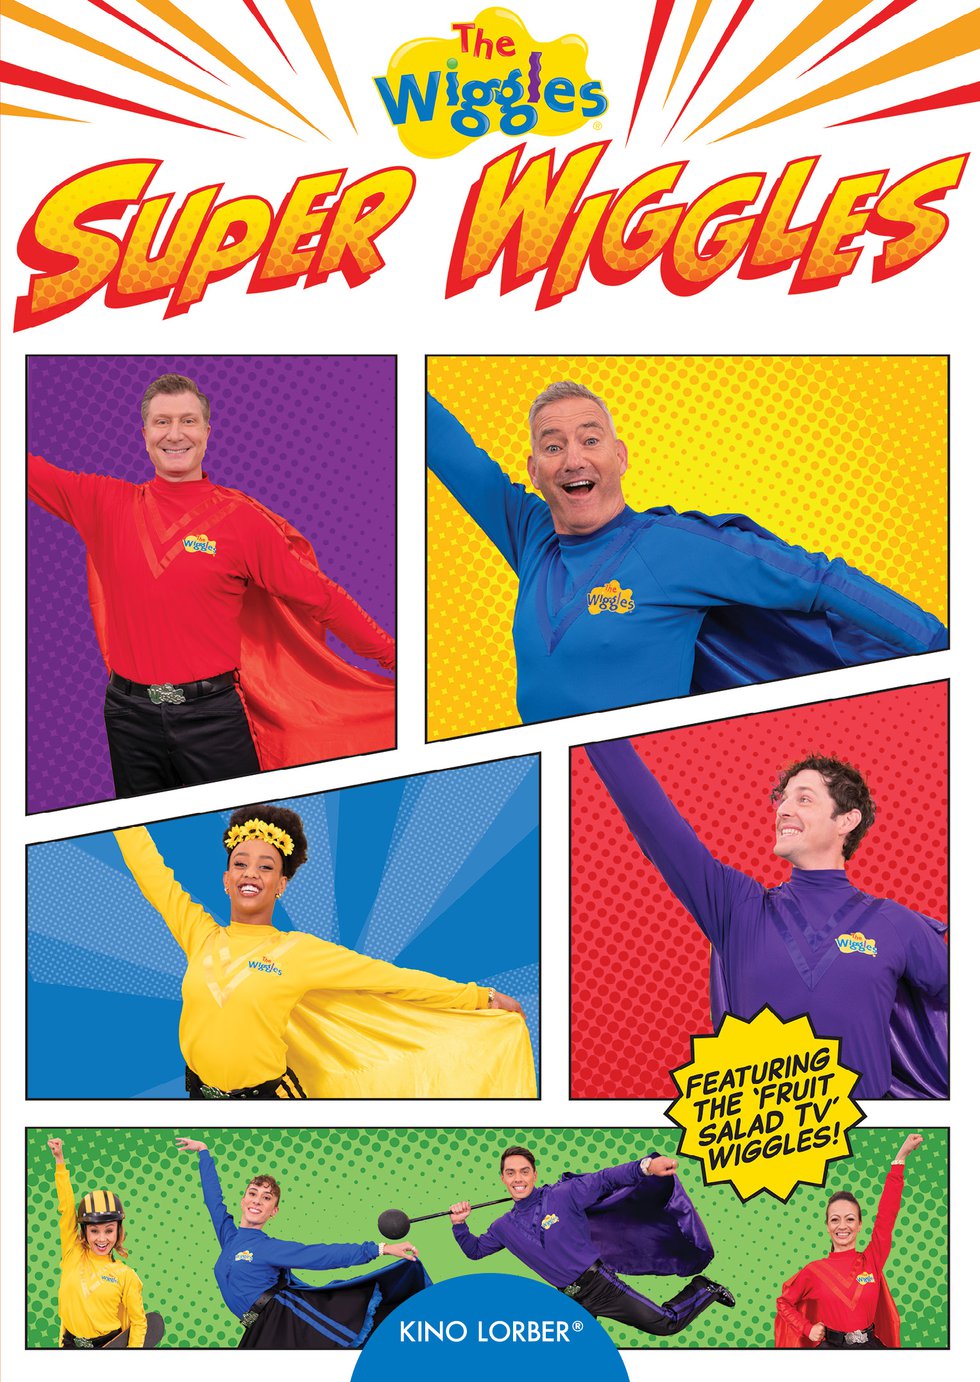 Super Wiggles Children's Show